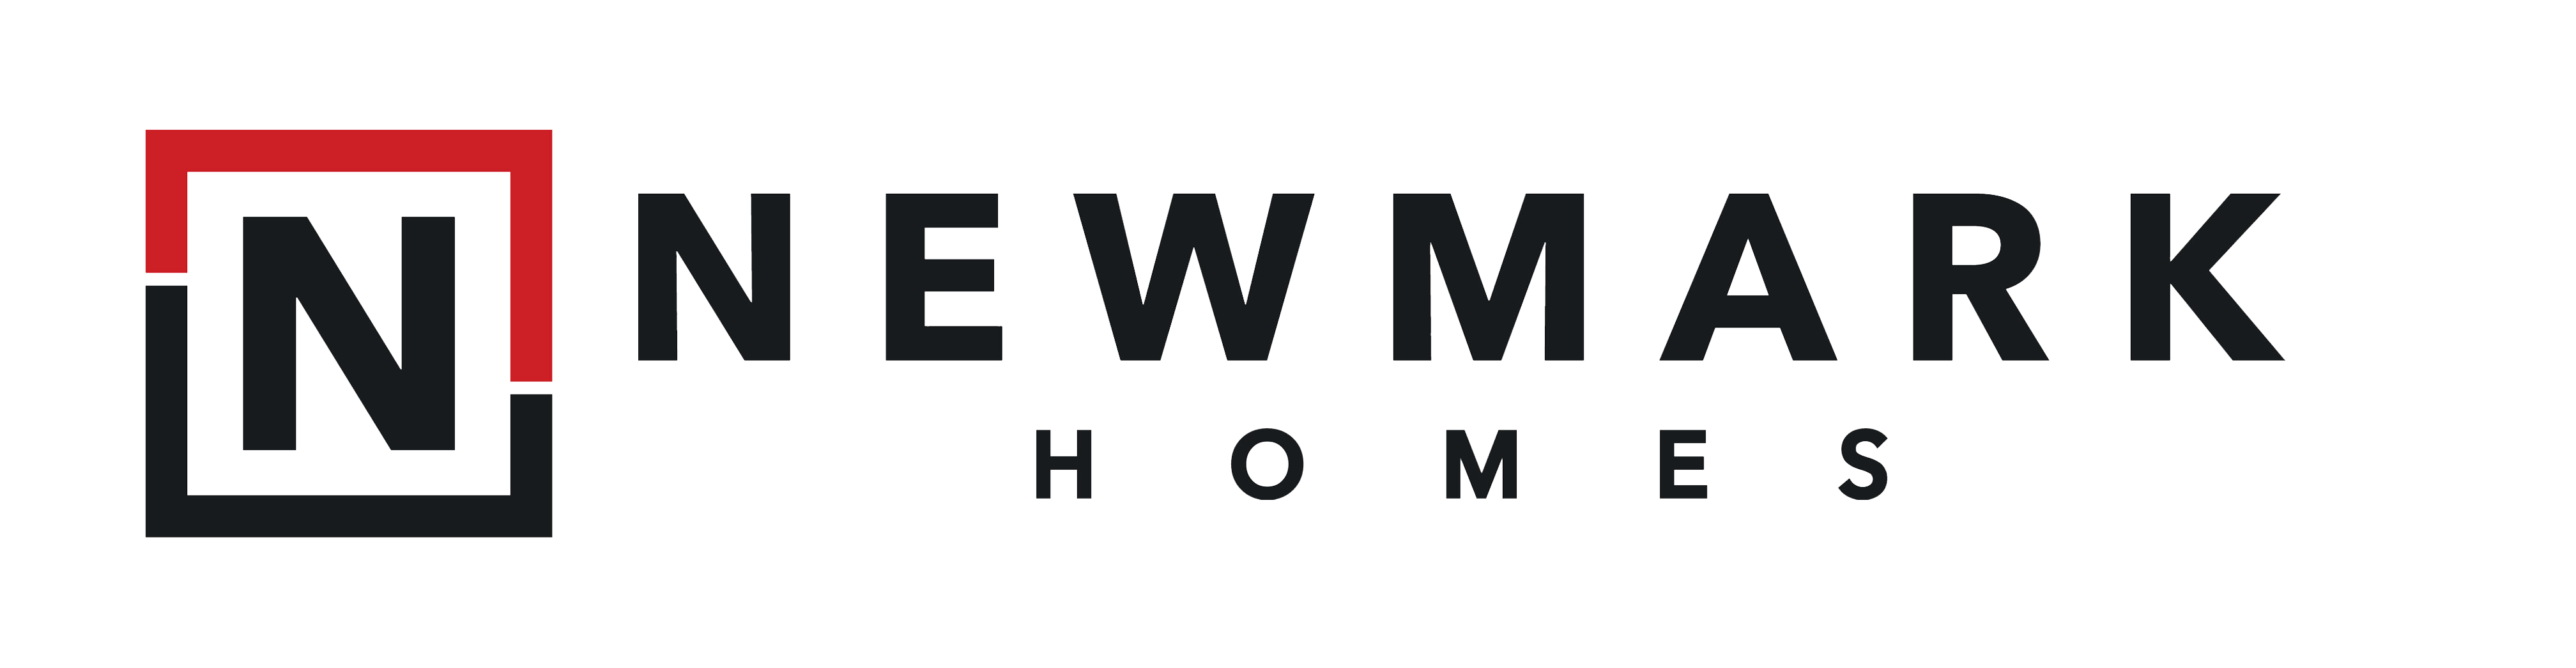 Newmark Homes Houston Company Logo